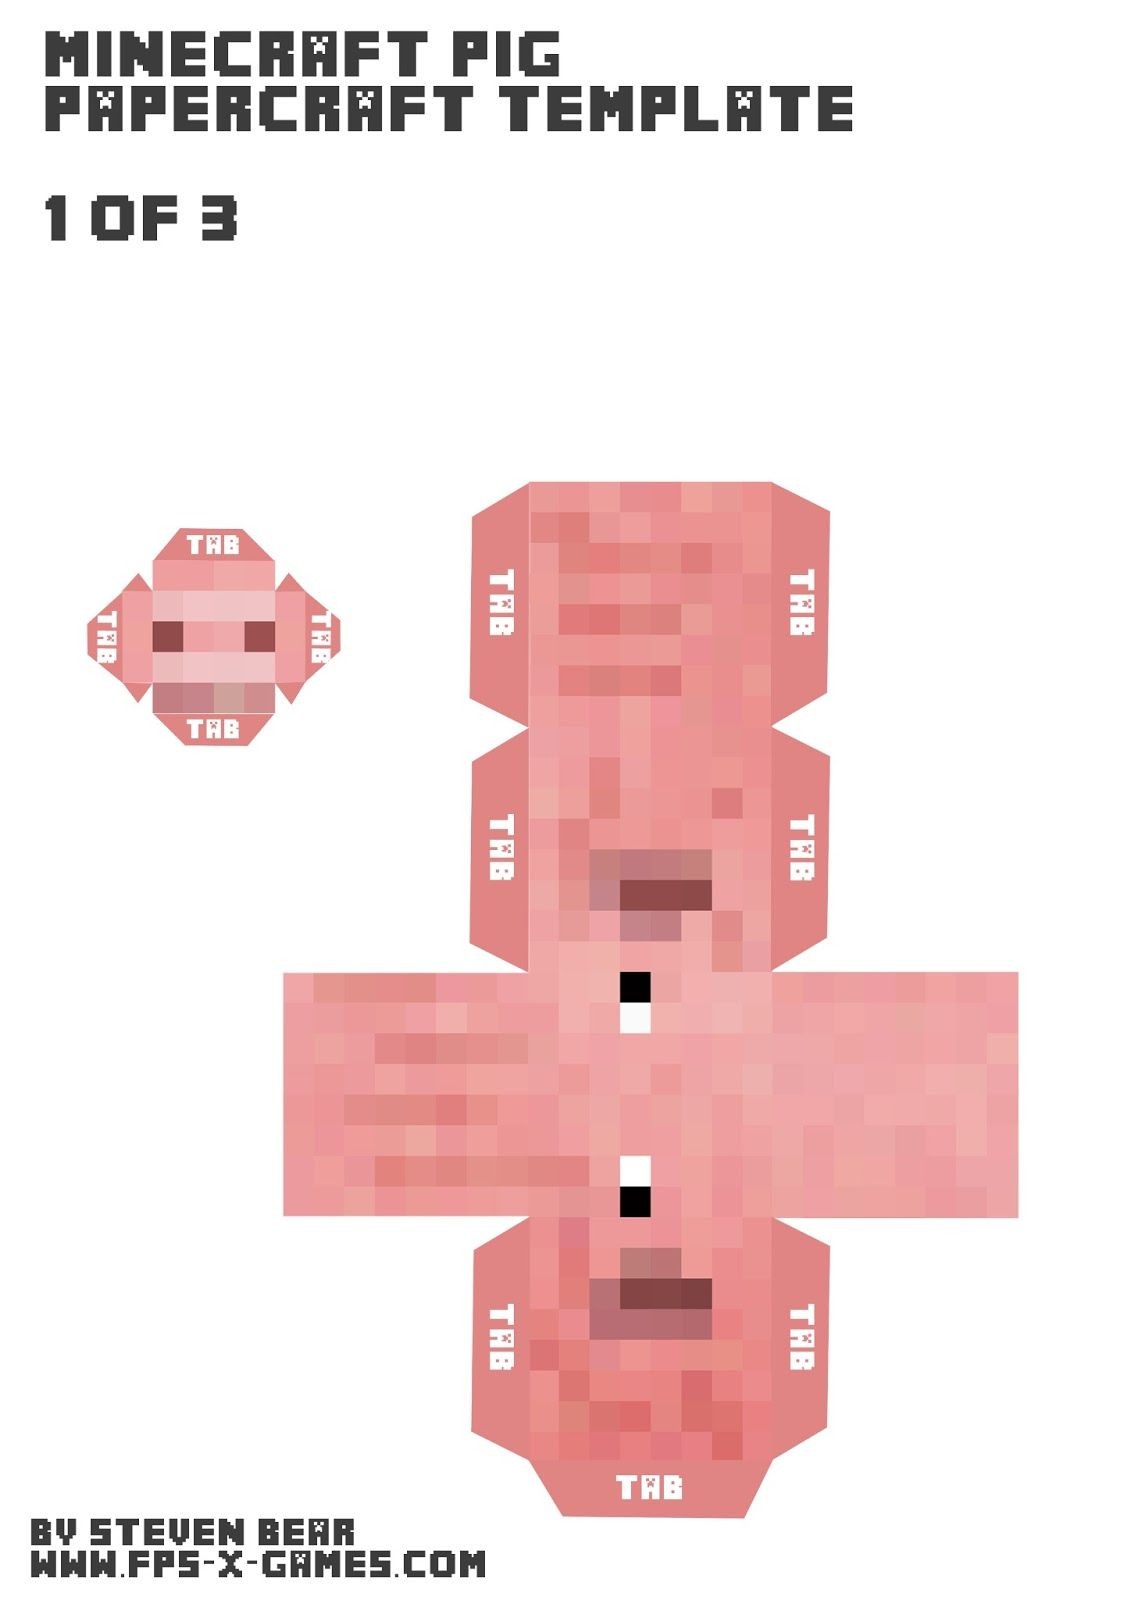 Printable Minecraft Papercraft Pig